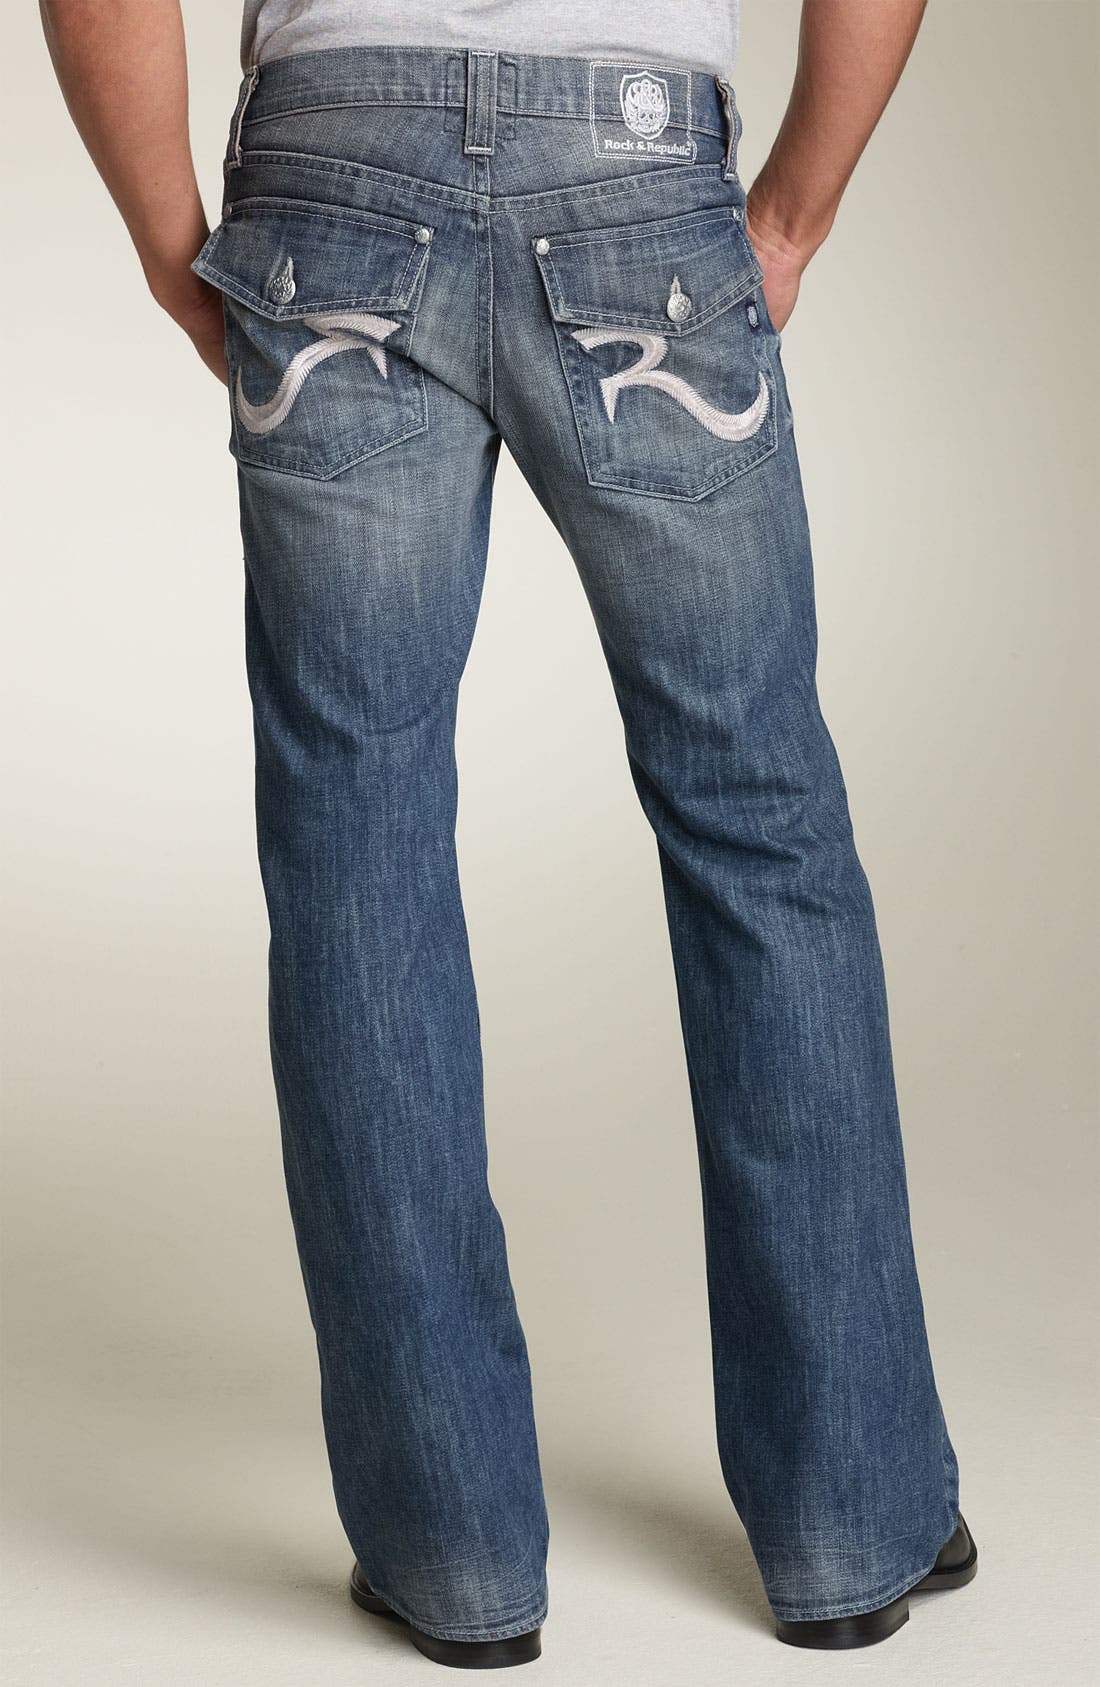 rock n republic jeans mens